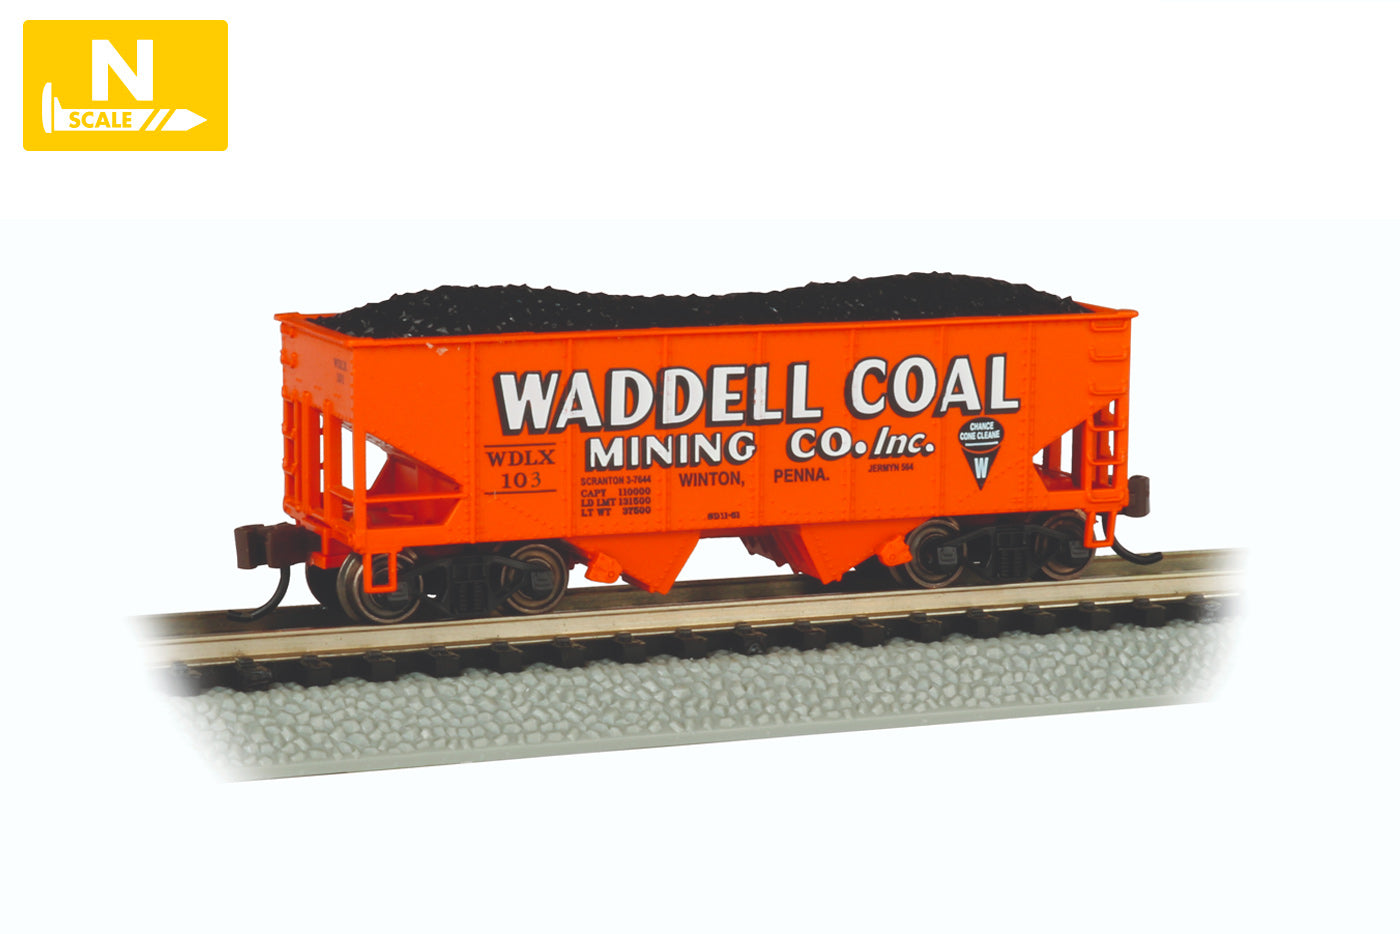 BAC19561: WADDELL COAL #103